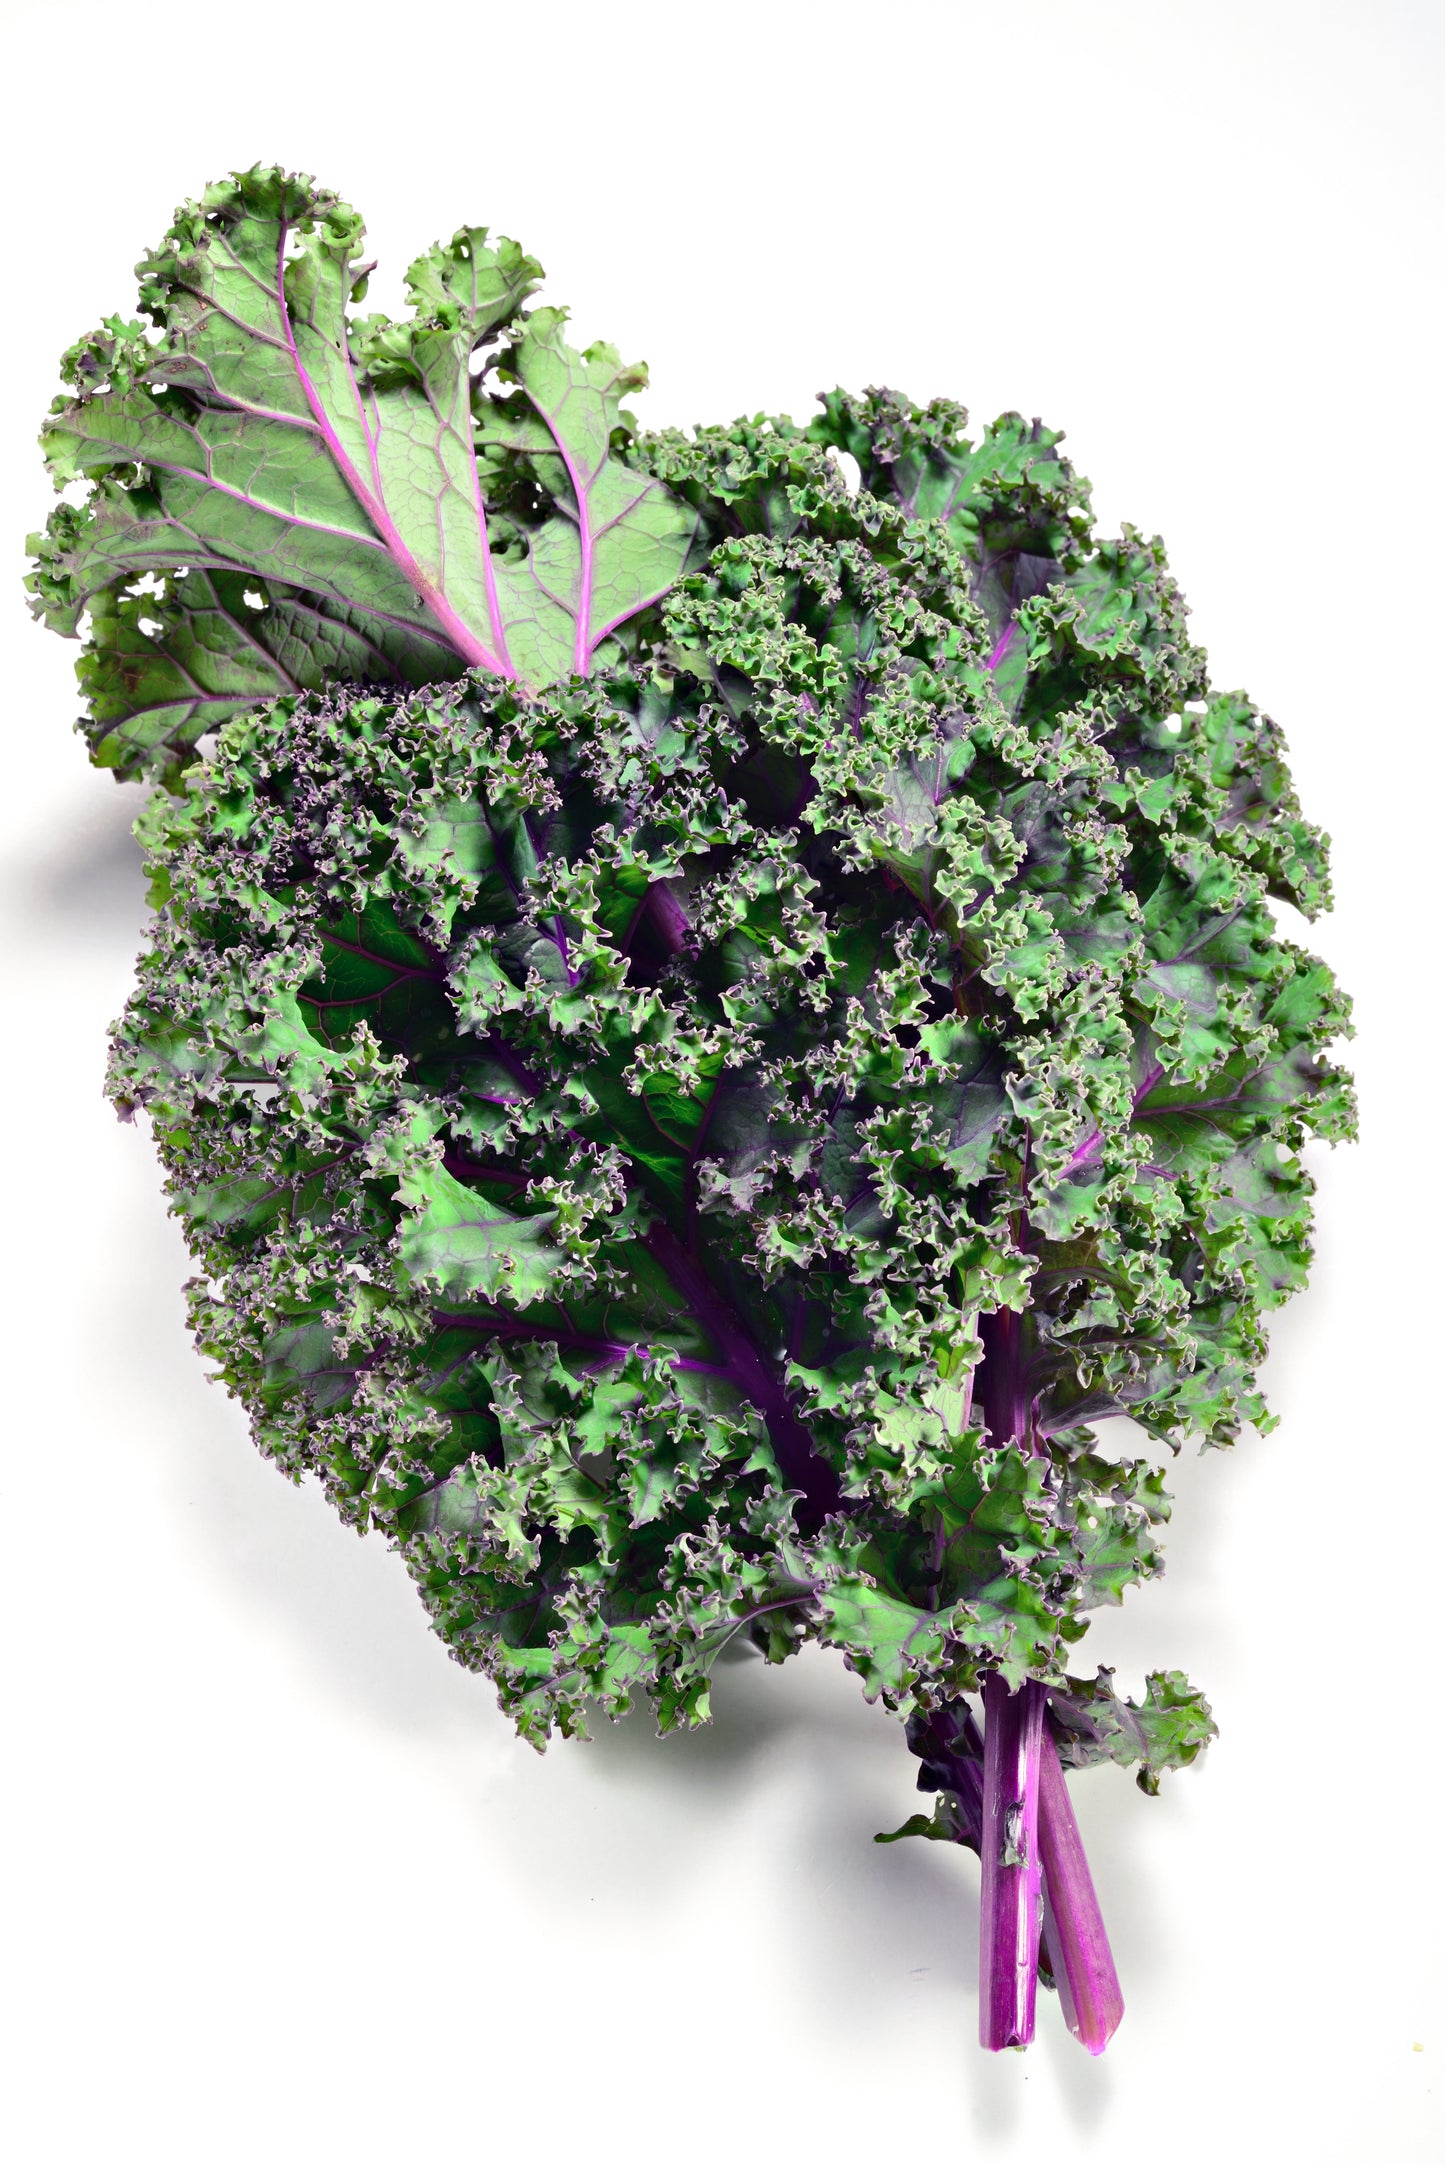 Organic Red Russian Kale